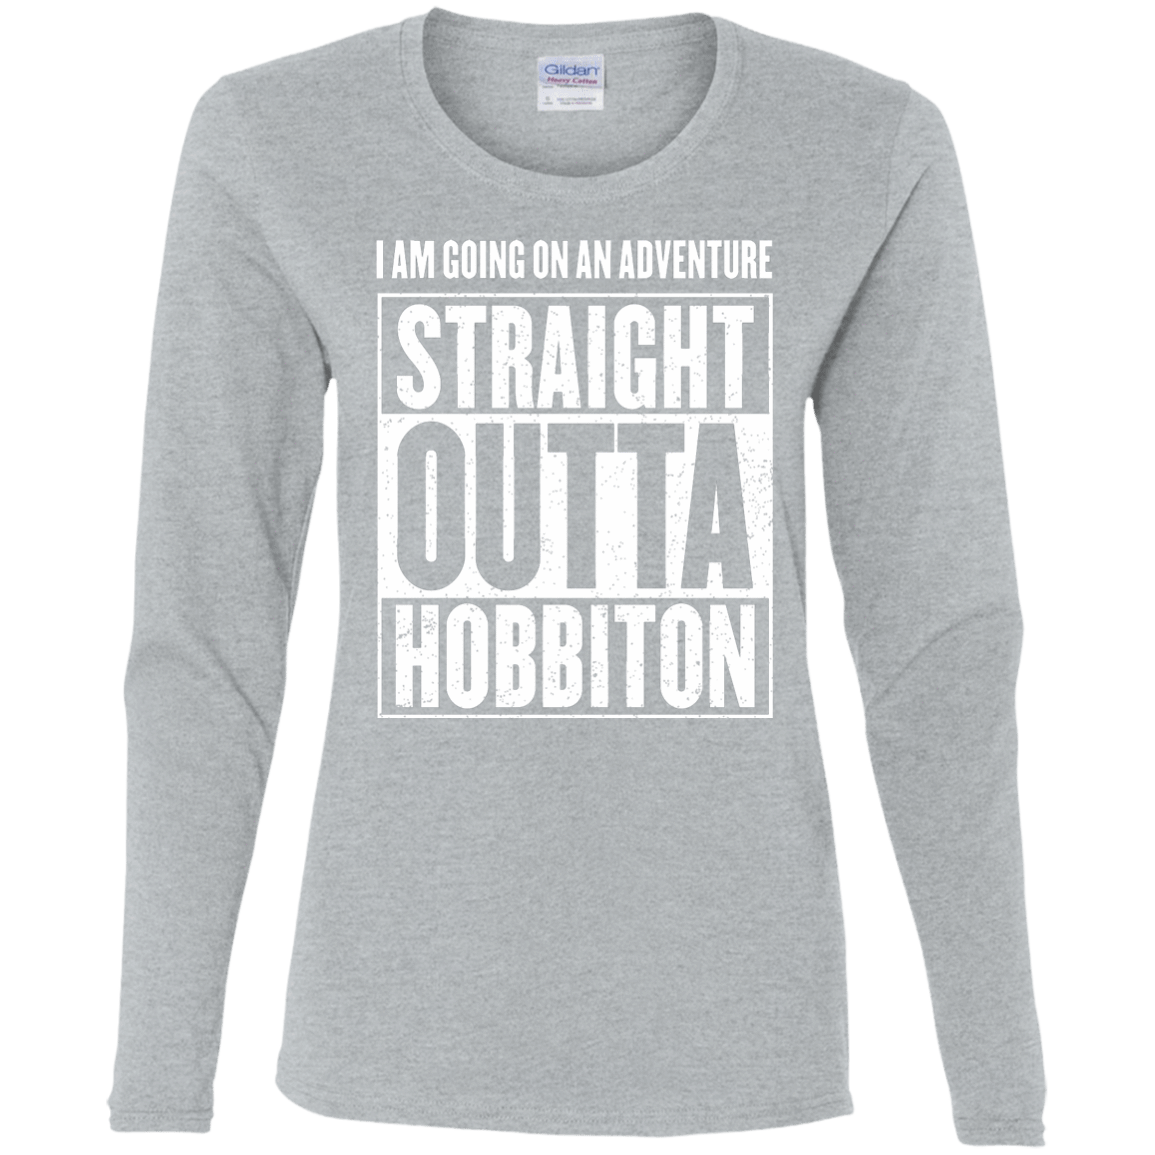 T-Shirts Sport Grey / S Straight Outta Hobbiton Women's Long Sleeve T-Shirt